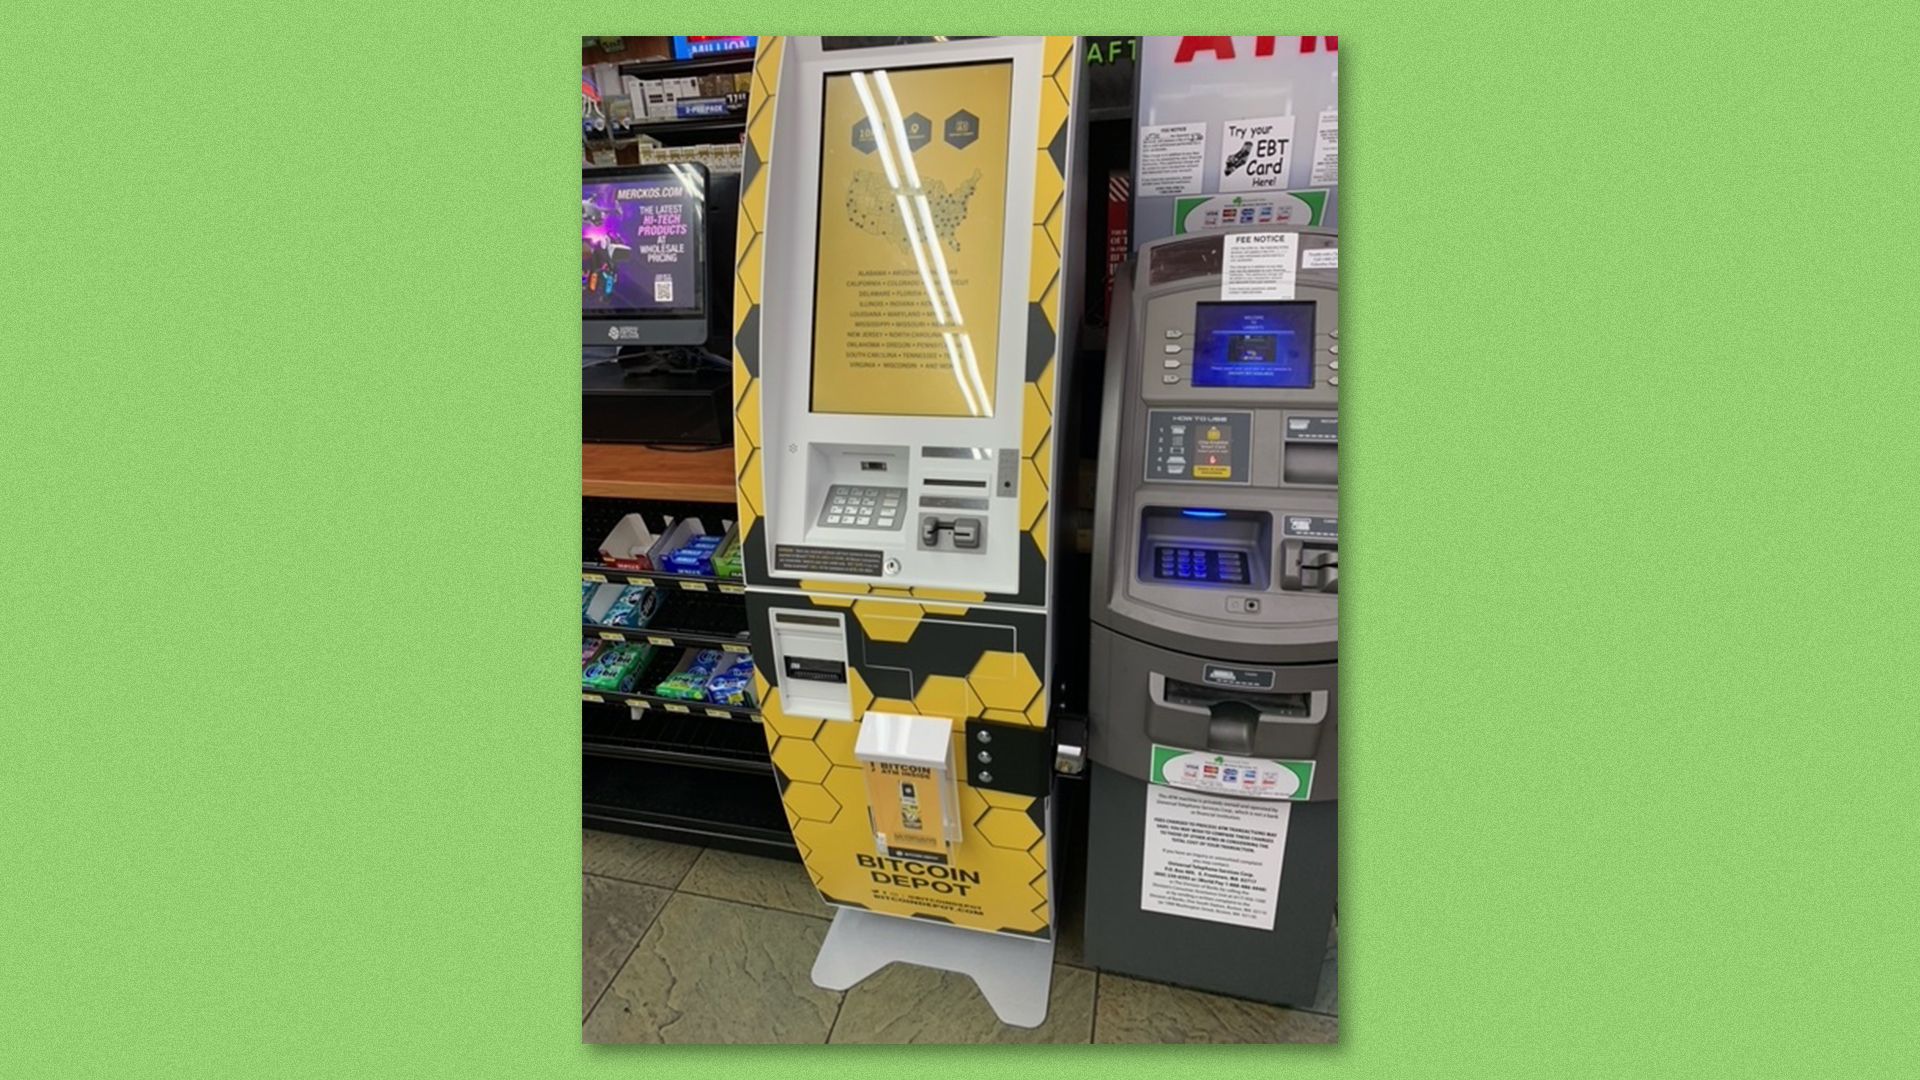 A Bitcoin ATM machine.